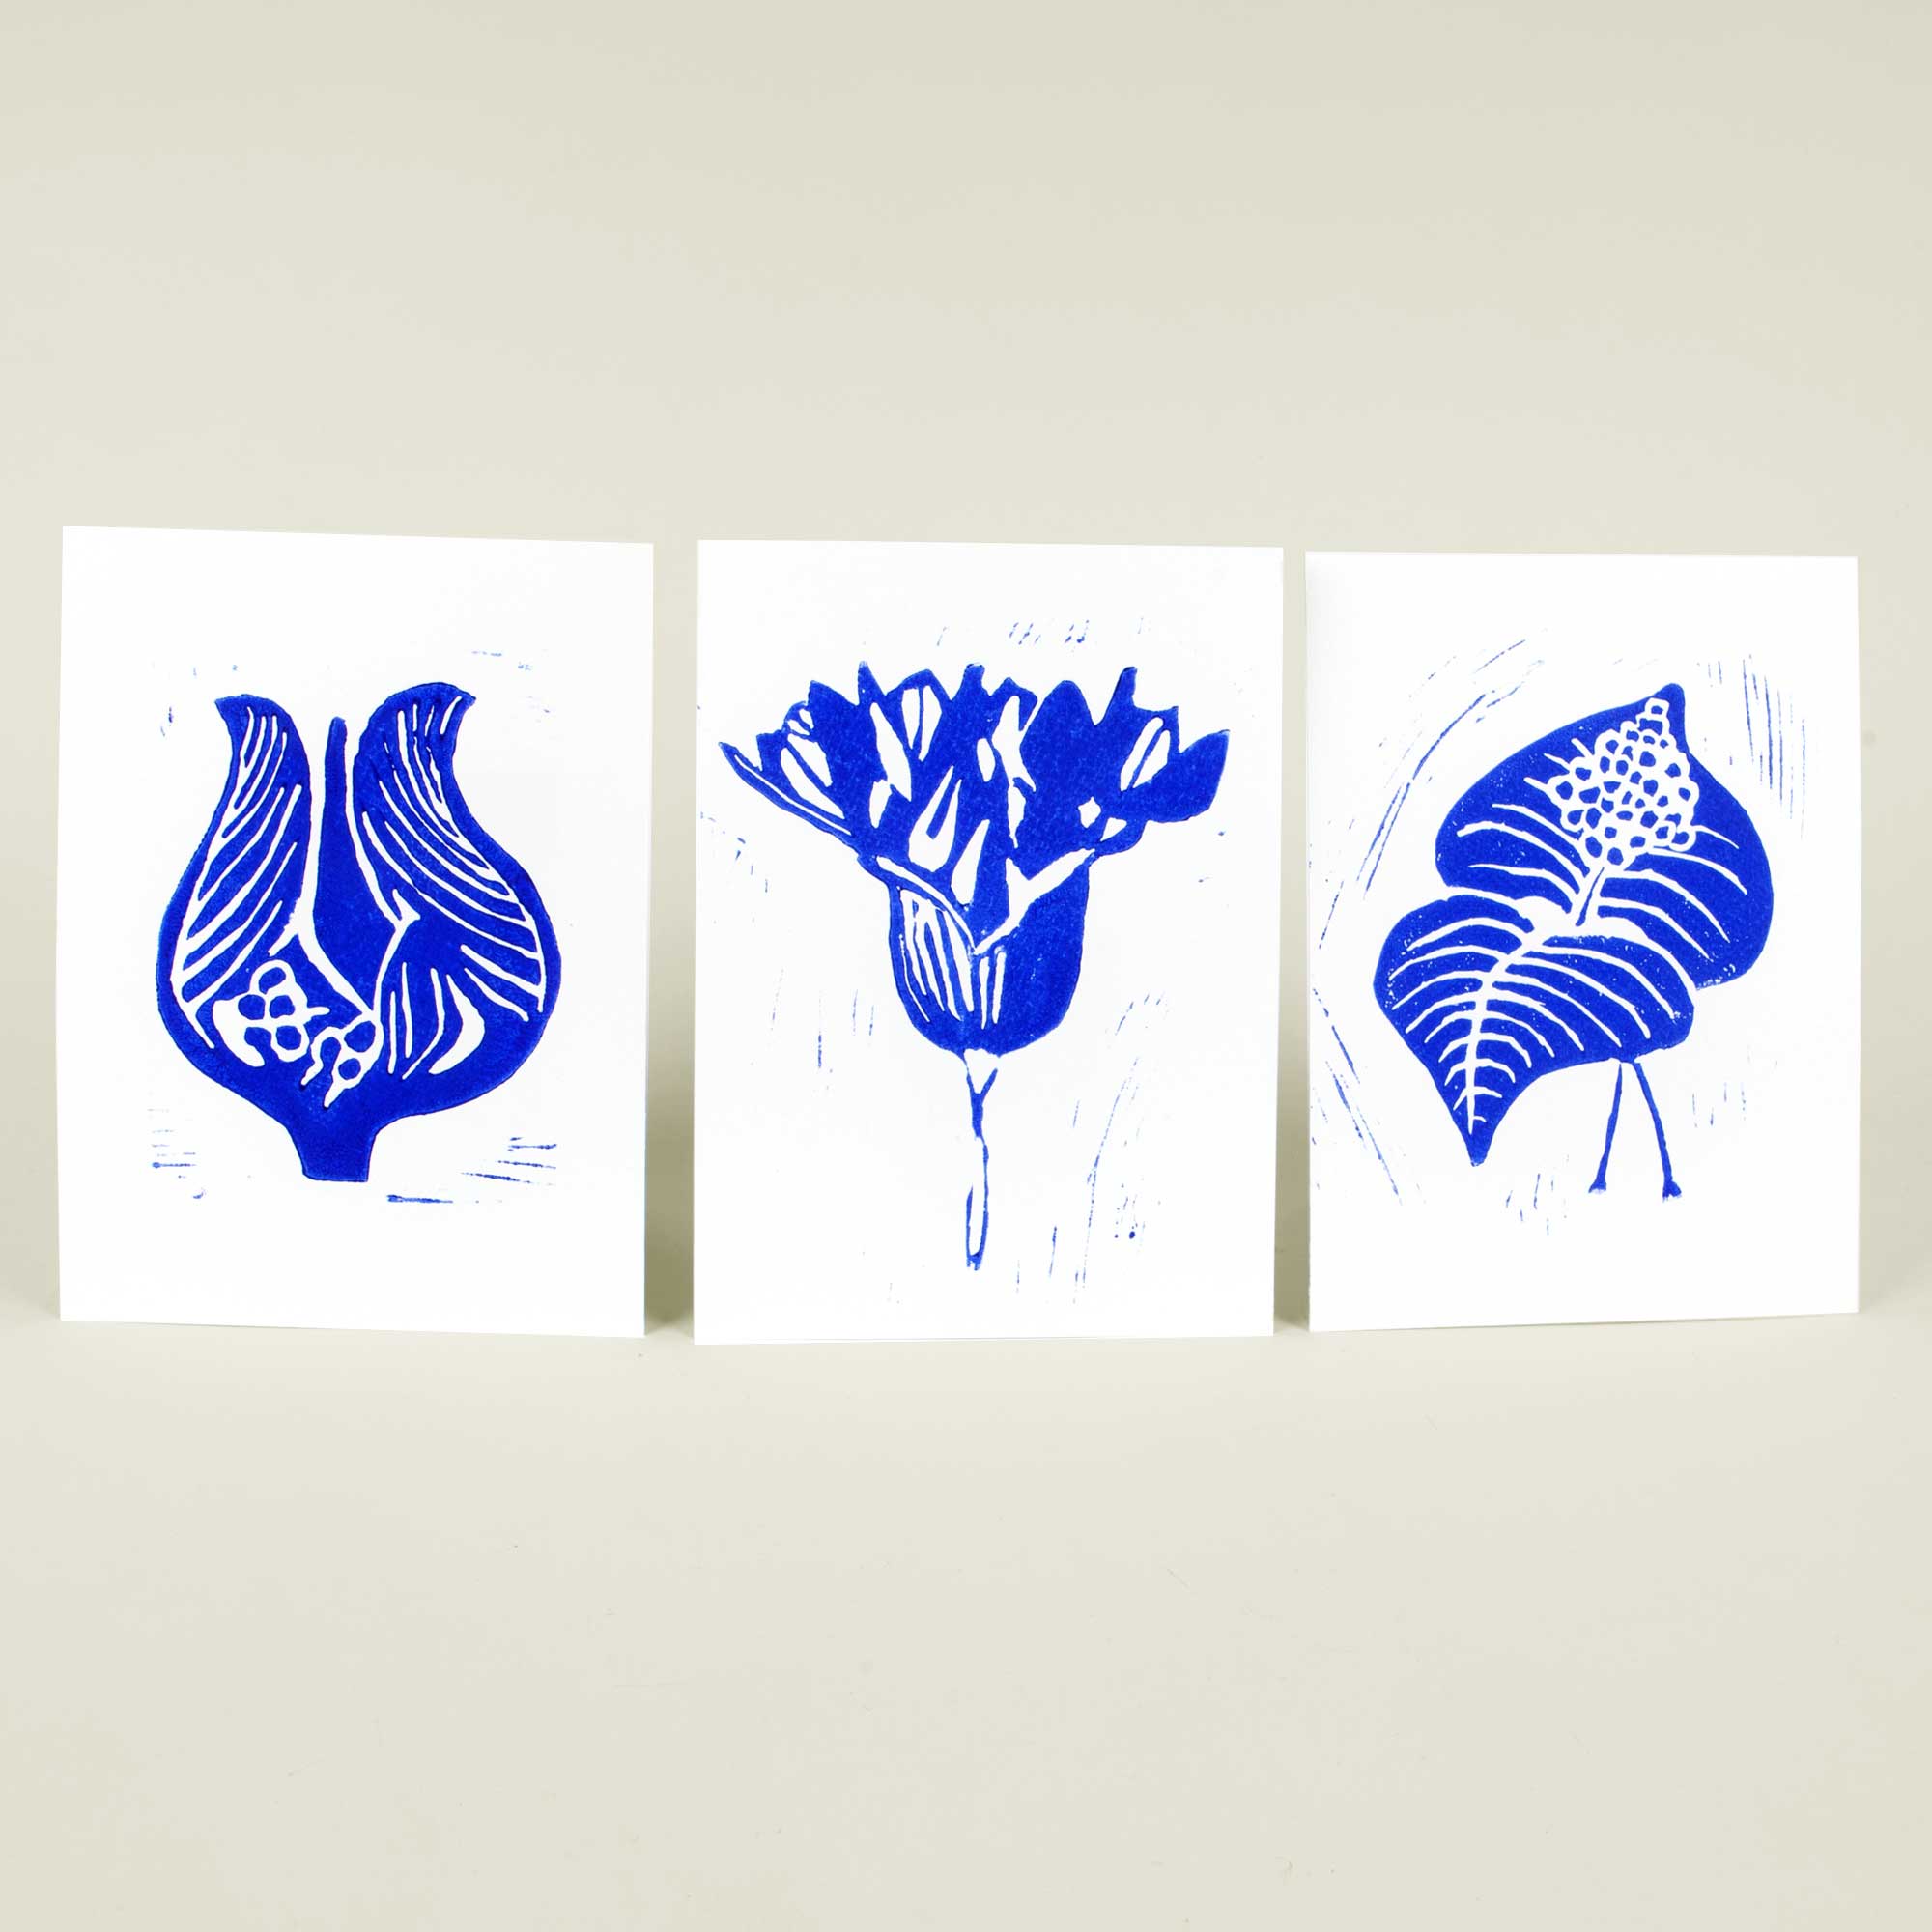 Hand printed linocut greeting cards - blue series, Linocut by Anne Rosenberg, RosenbergCph